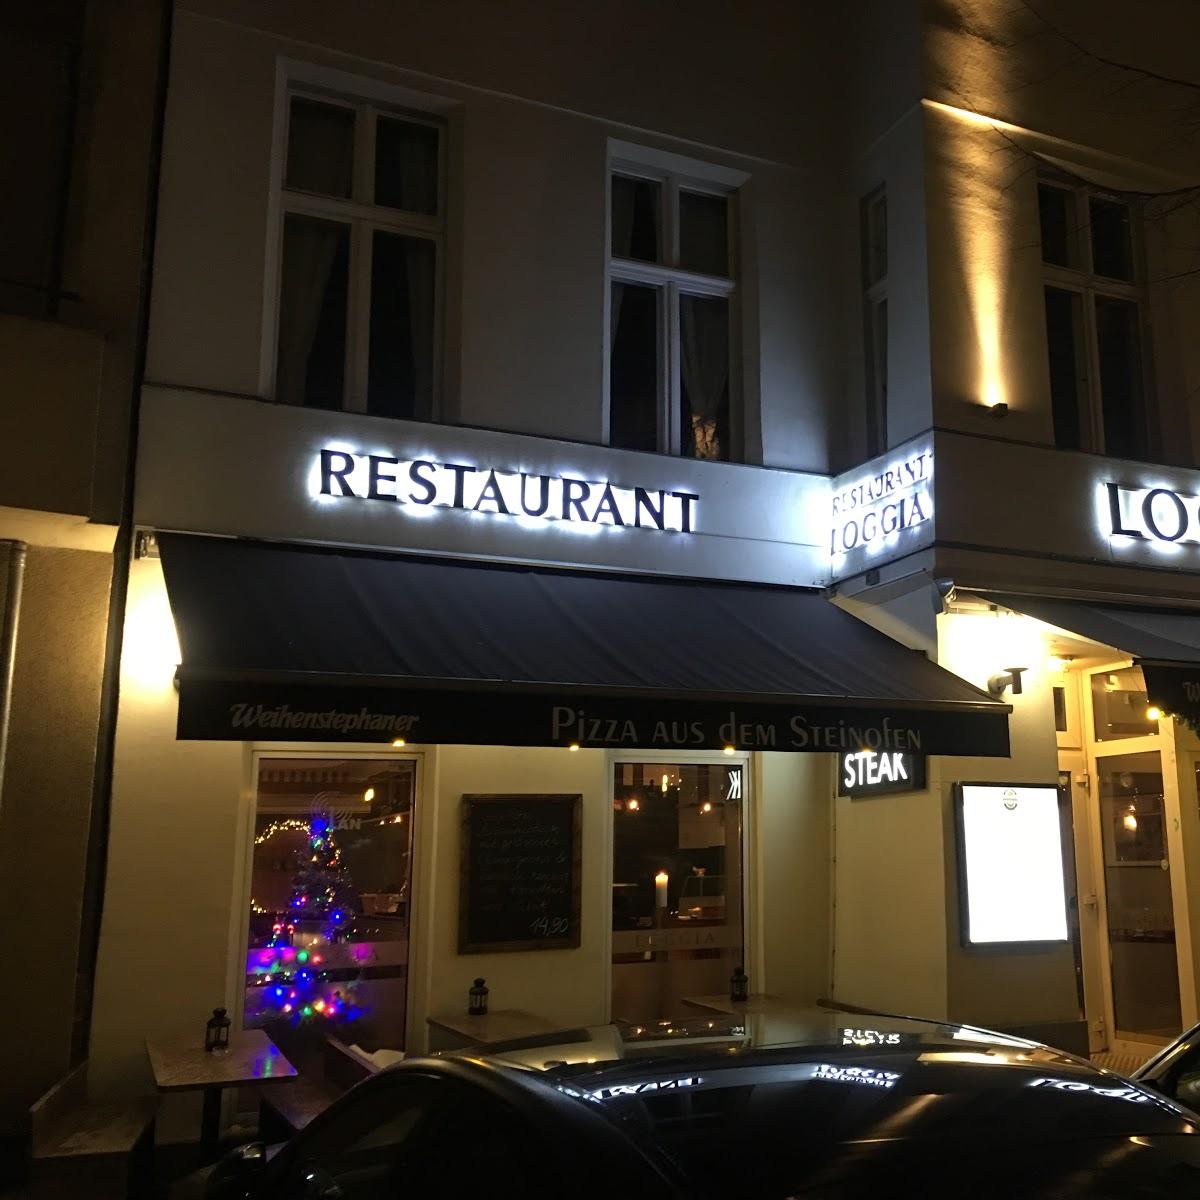 Restaurant "Restaurant Loggia" in  Berlin